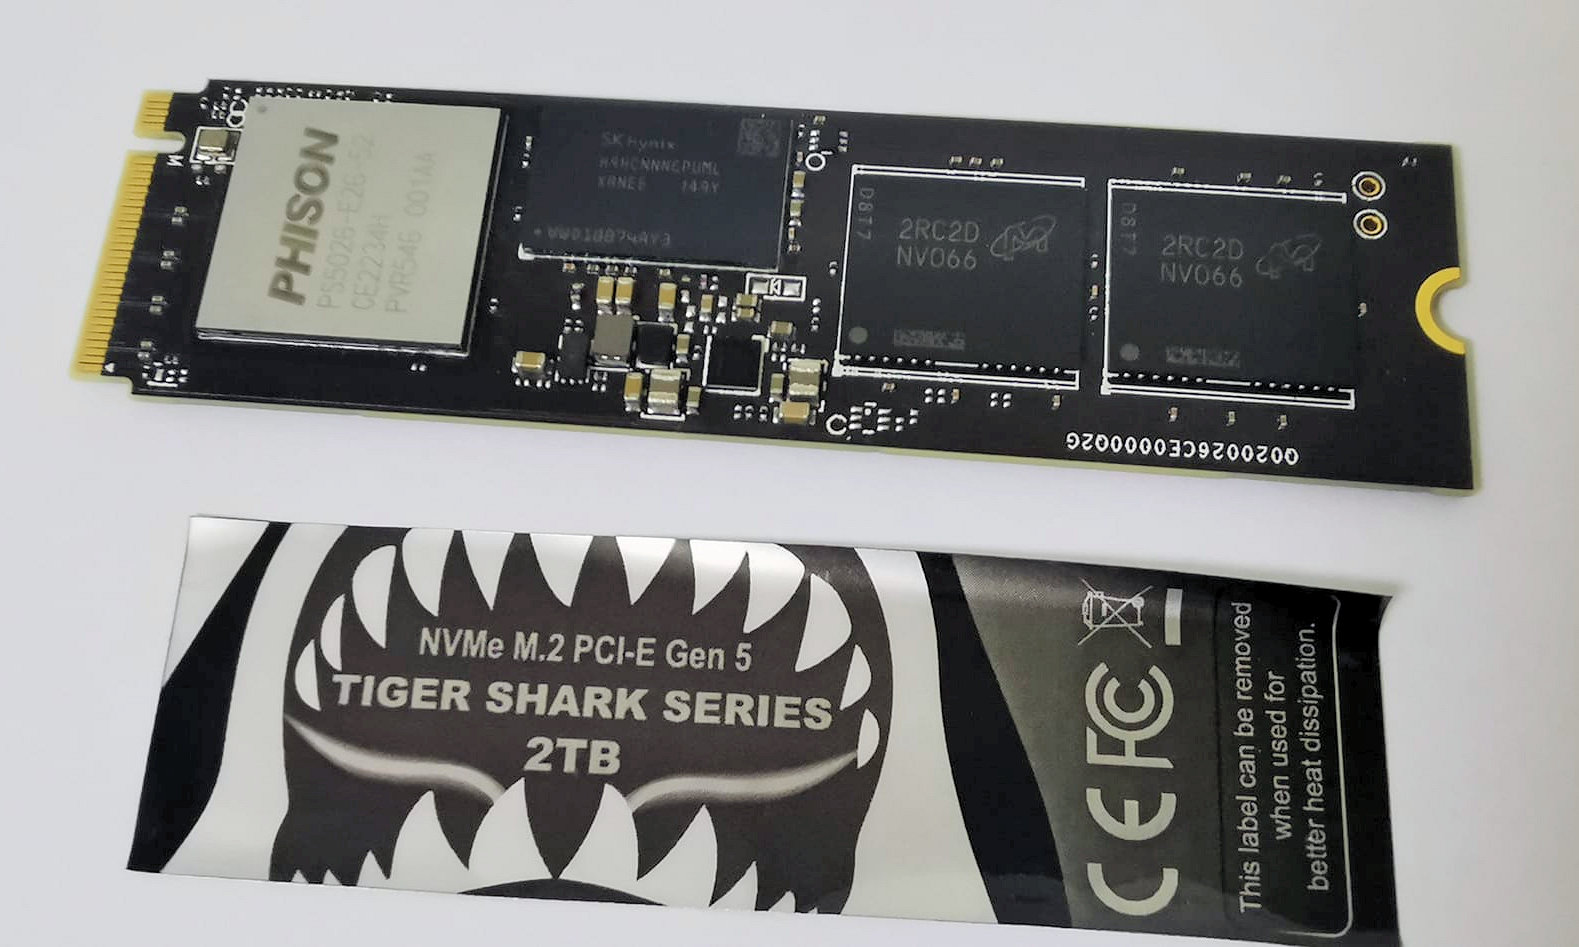 SSTC Tiger Shark SSD